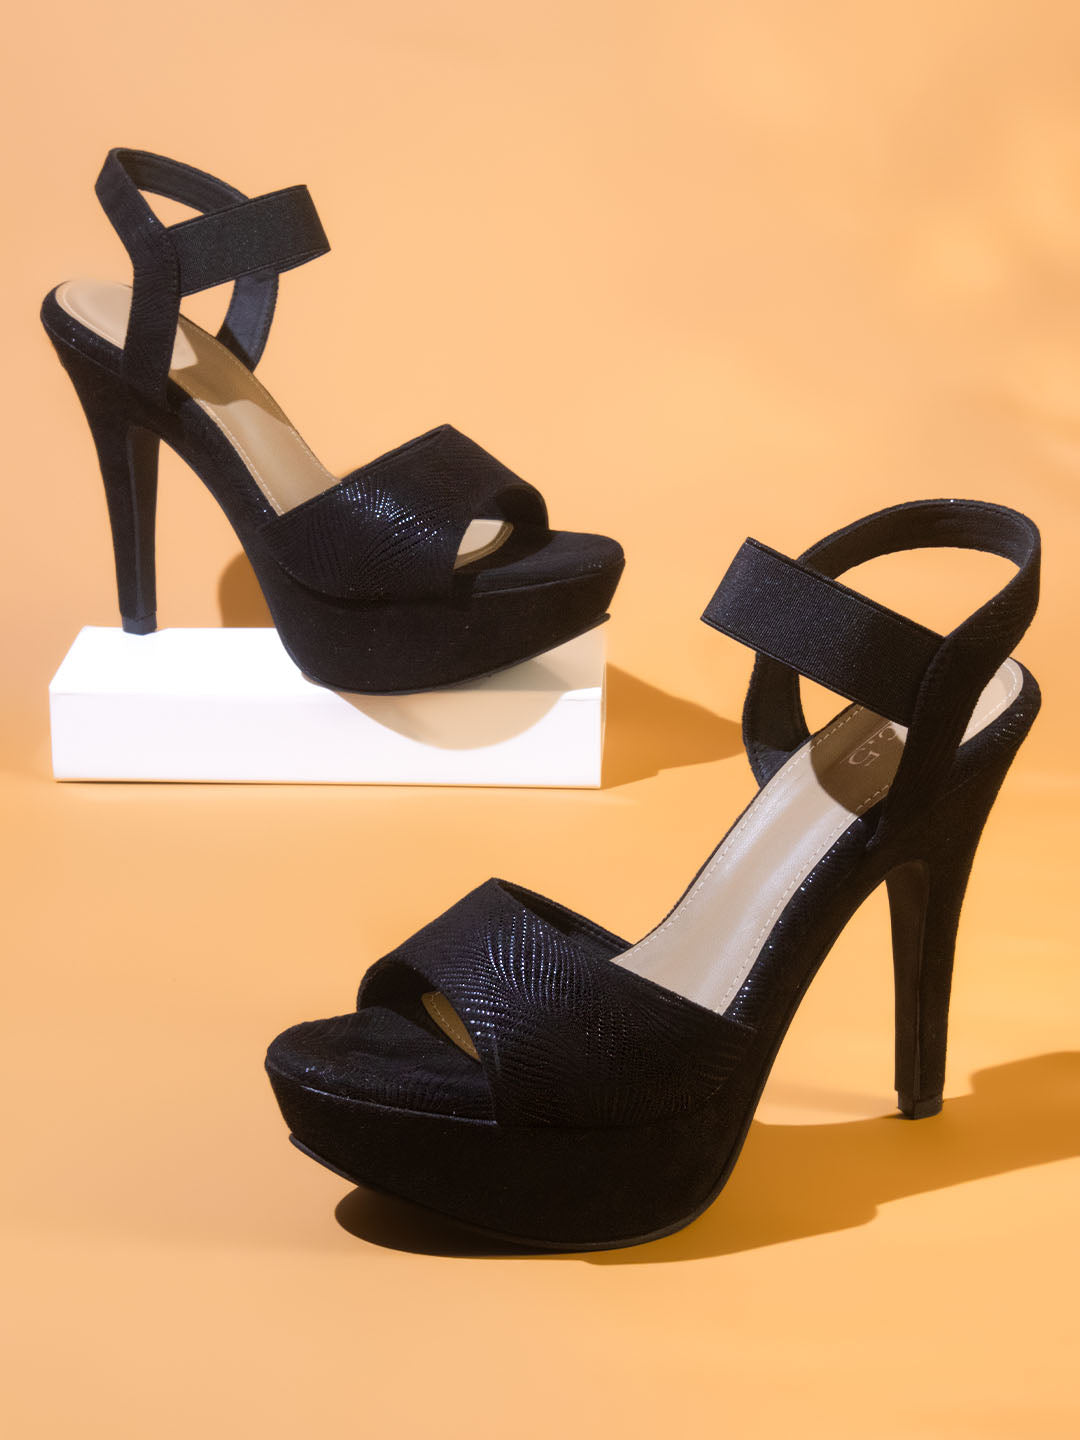 6 Inch Stiletto Heels - Buy 6 Inch Stiletto Heels online in India